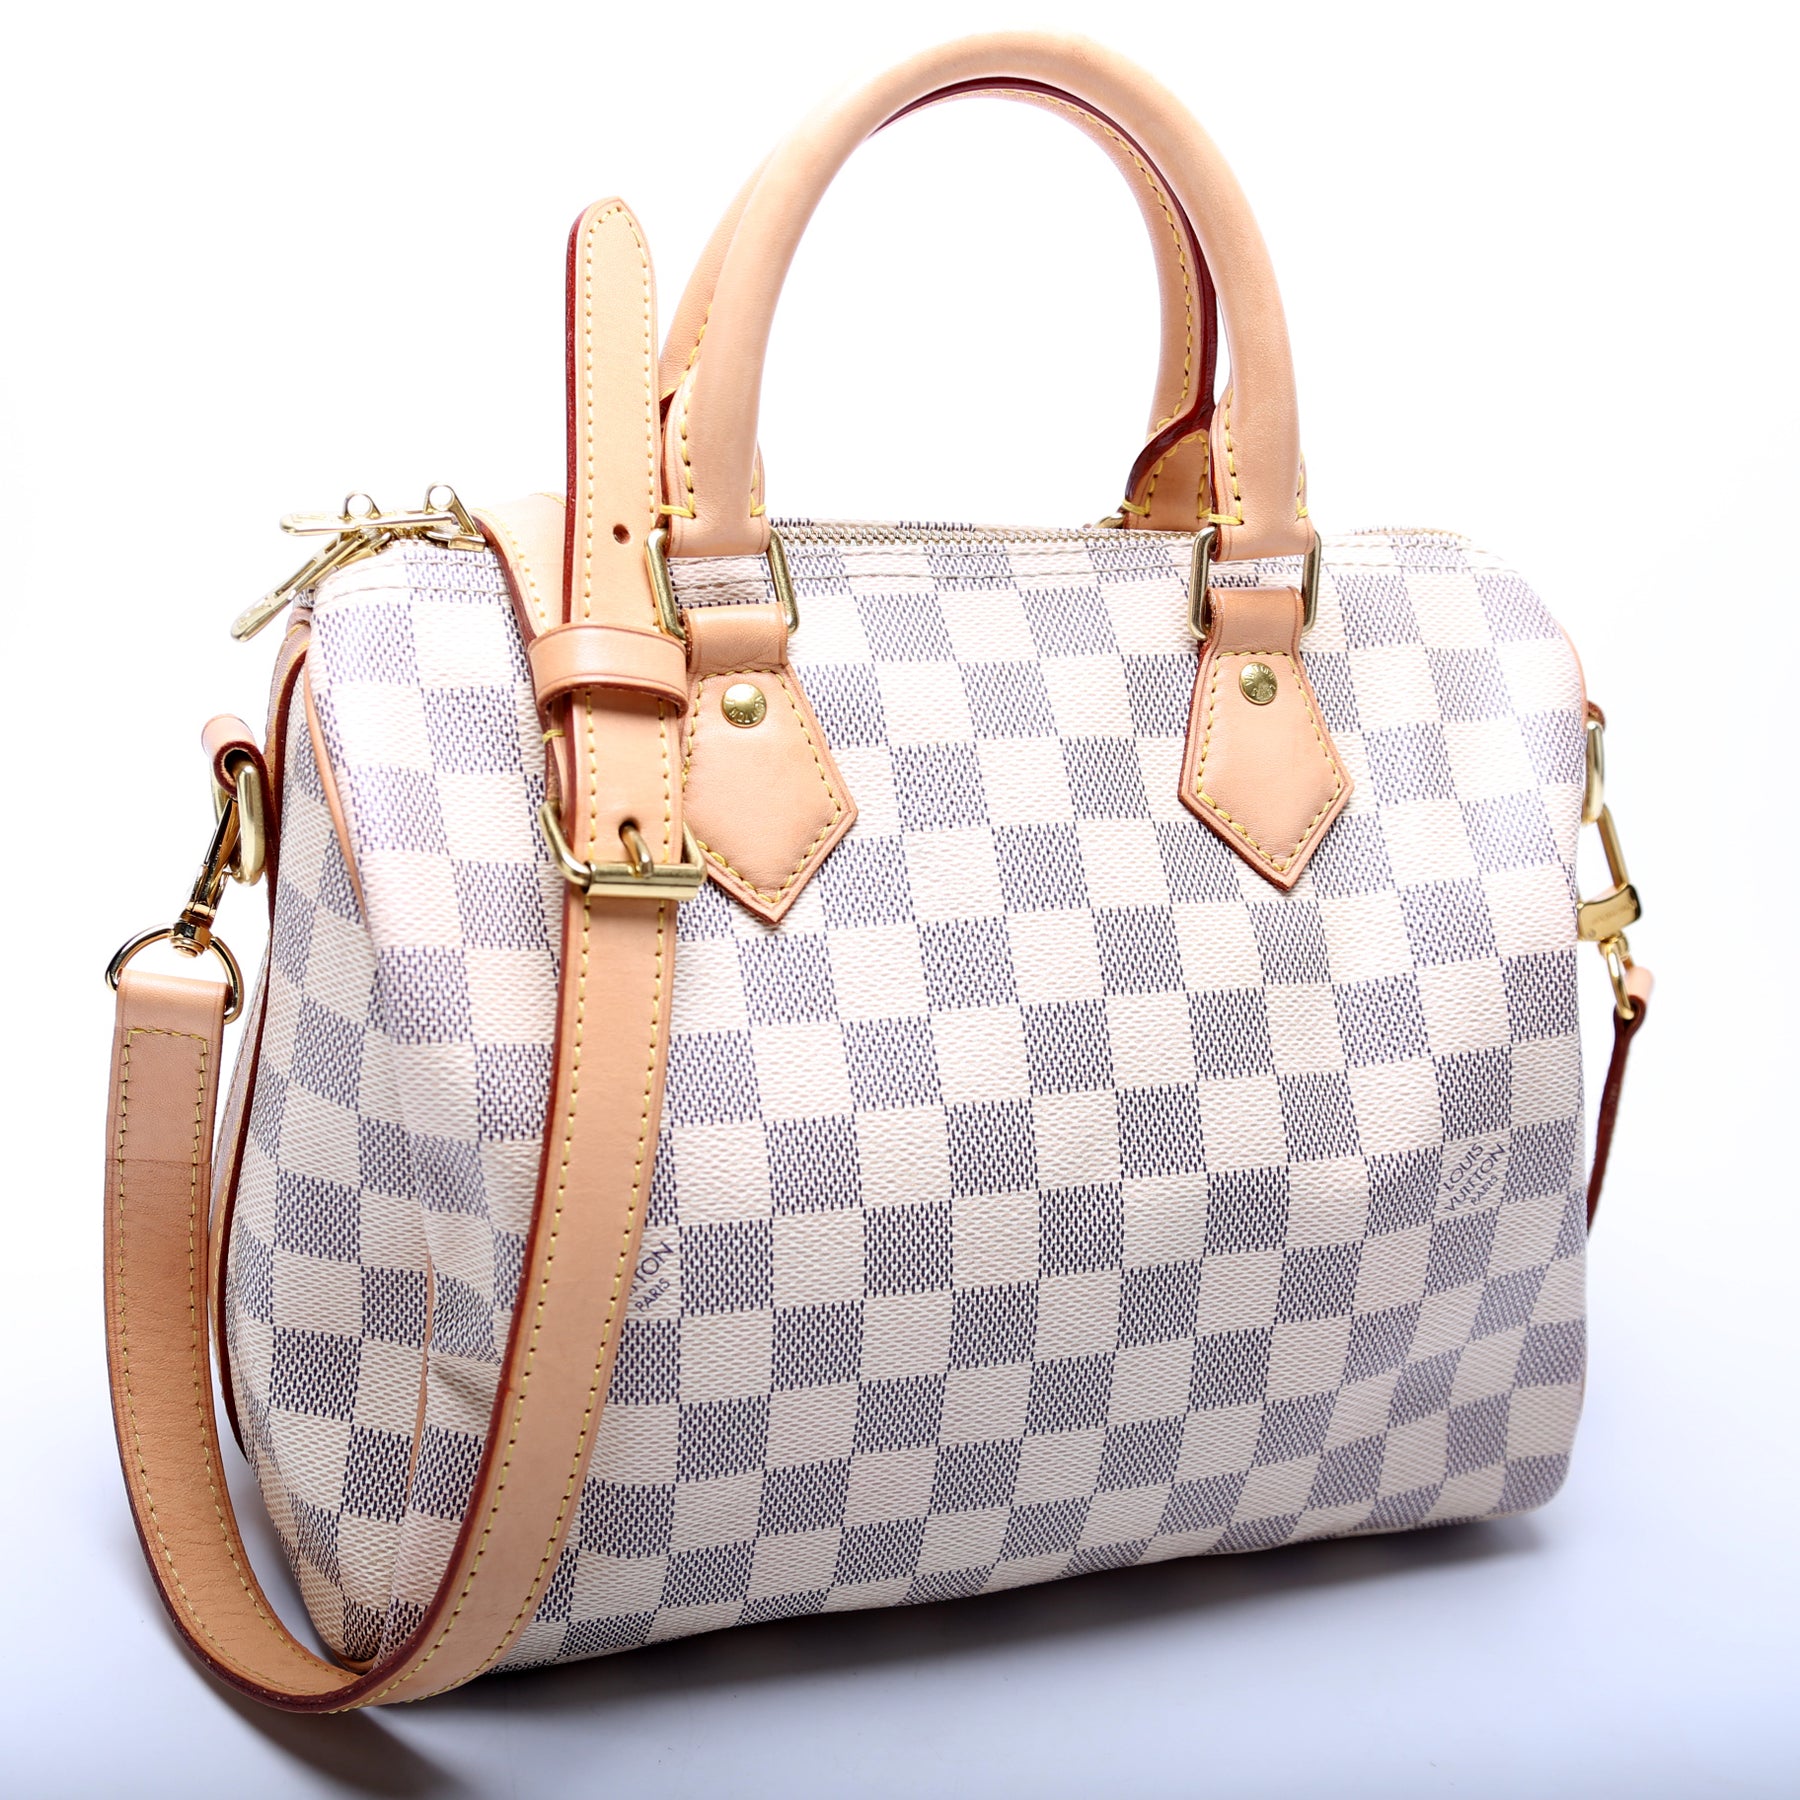 Louis Vuitton Speedy 25 Damier Azur Shoulder Bag